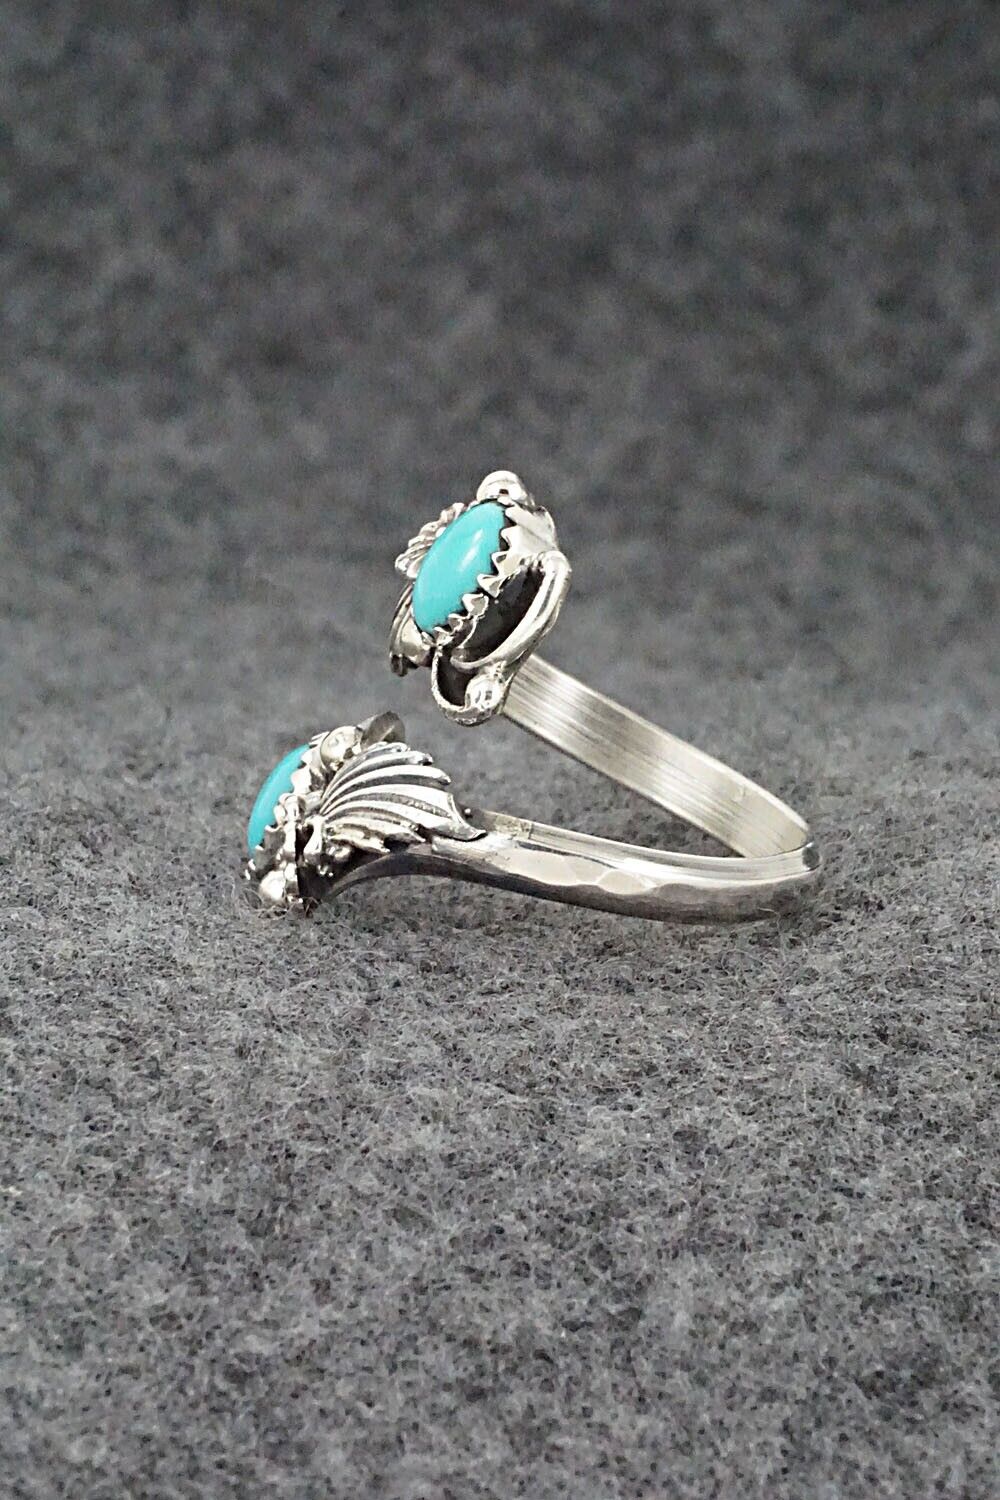 Turquoise & Sterling Silver Ring - Etta Belin - Size 8.75